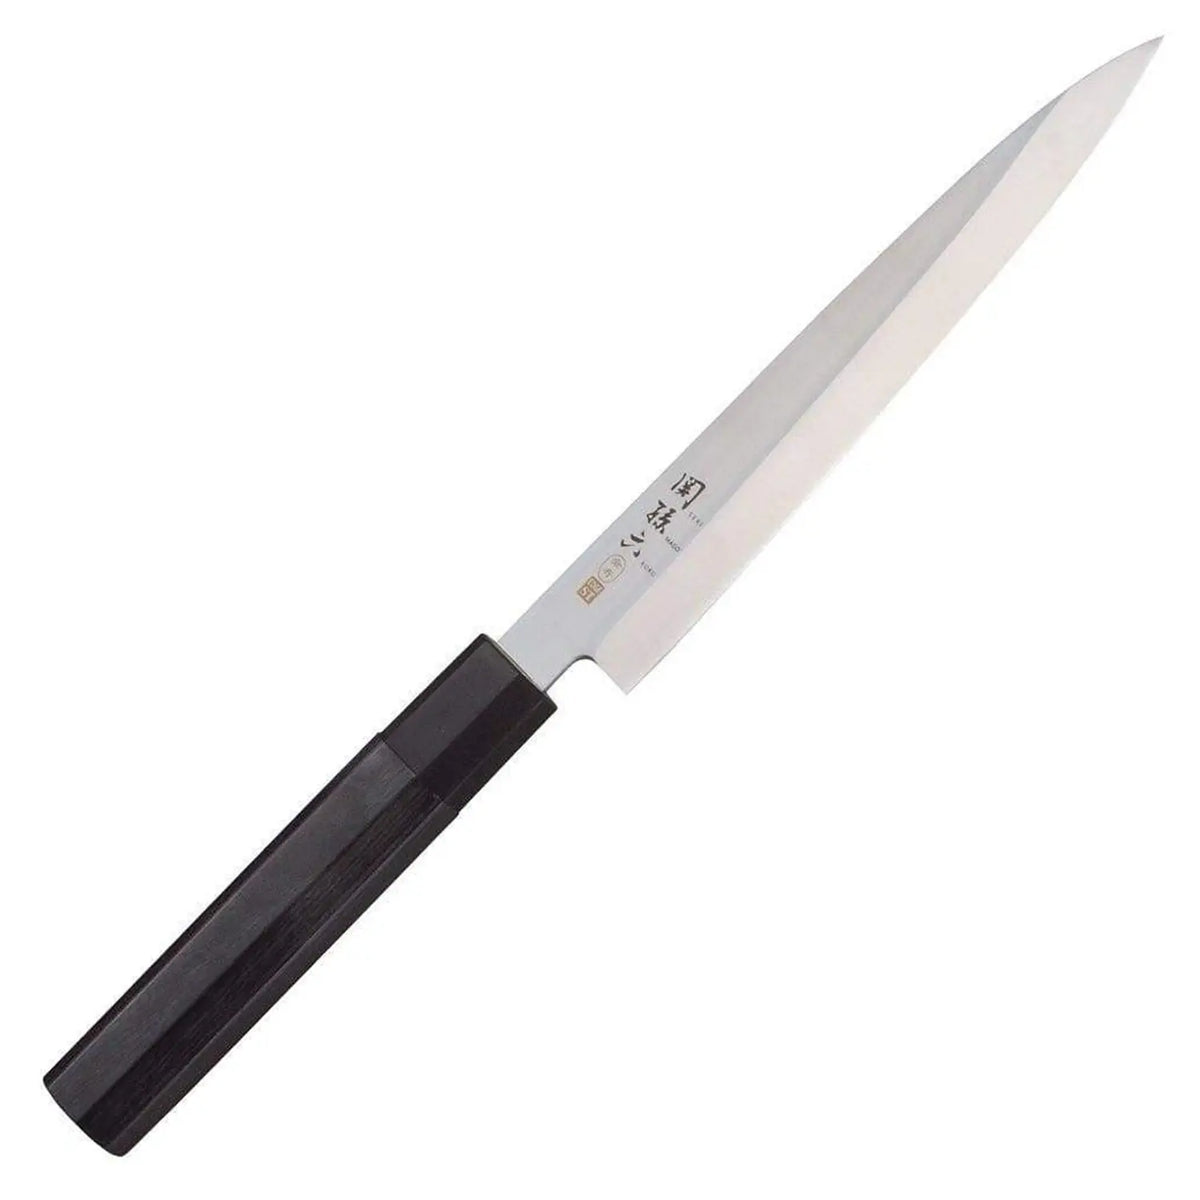 Seki Magoroku Kinju ST Stainless Steel Sashimi Yanagiba Knife